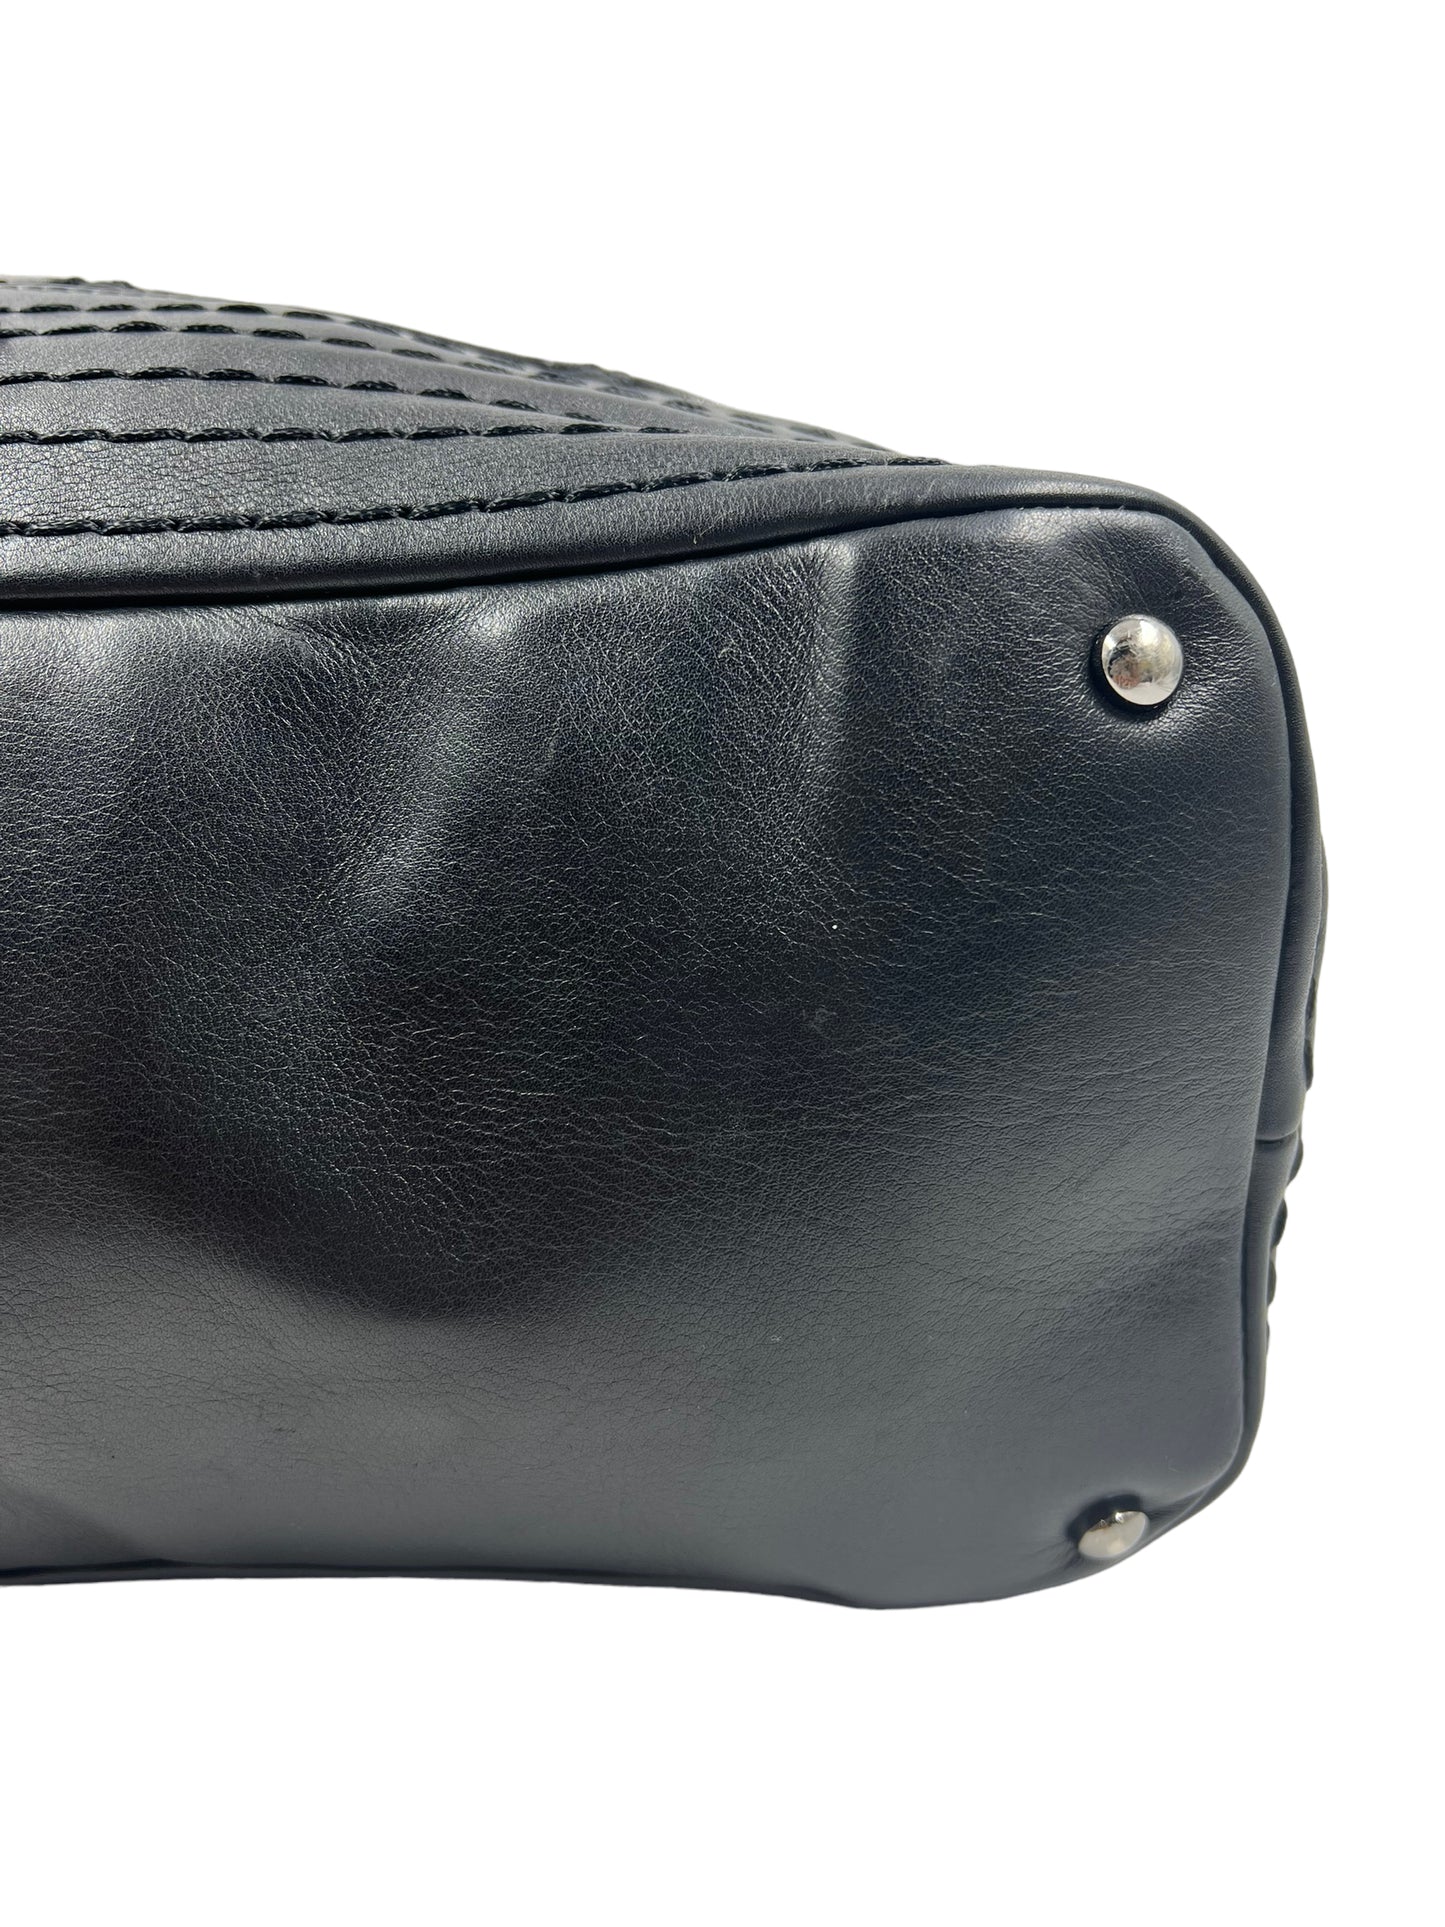 Chanel Black Leather 2006-2008 Expandable Ligne Bag